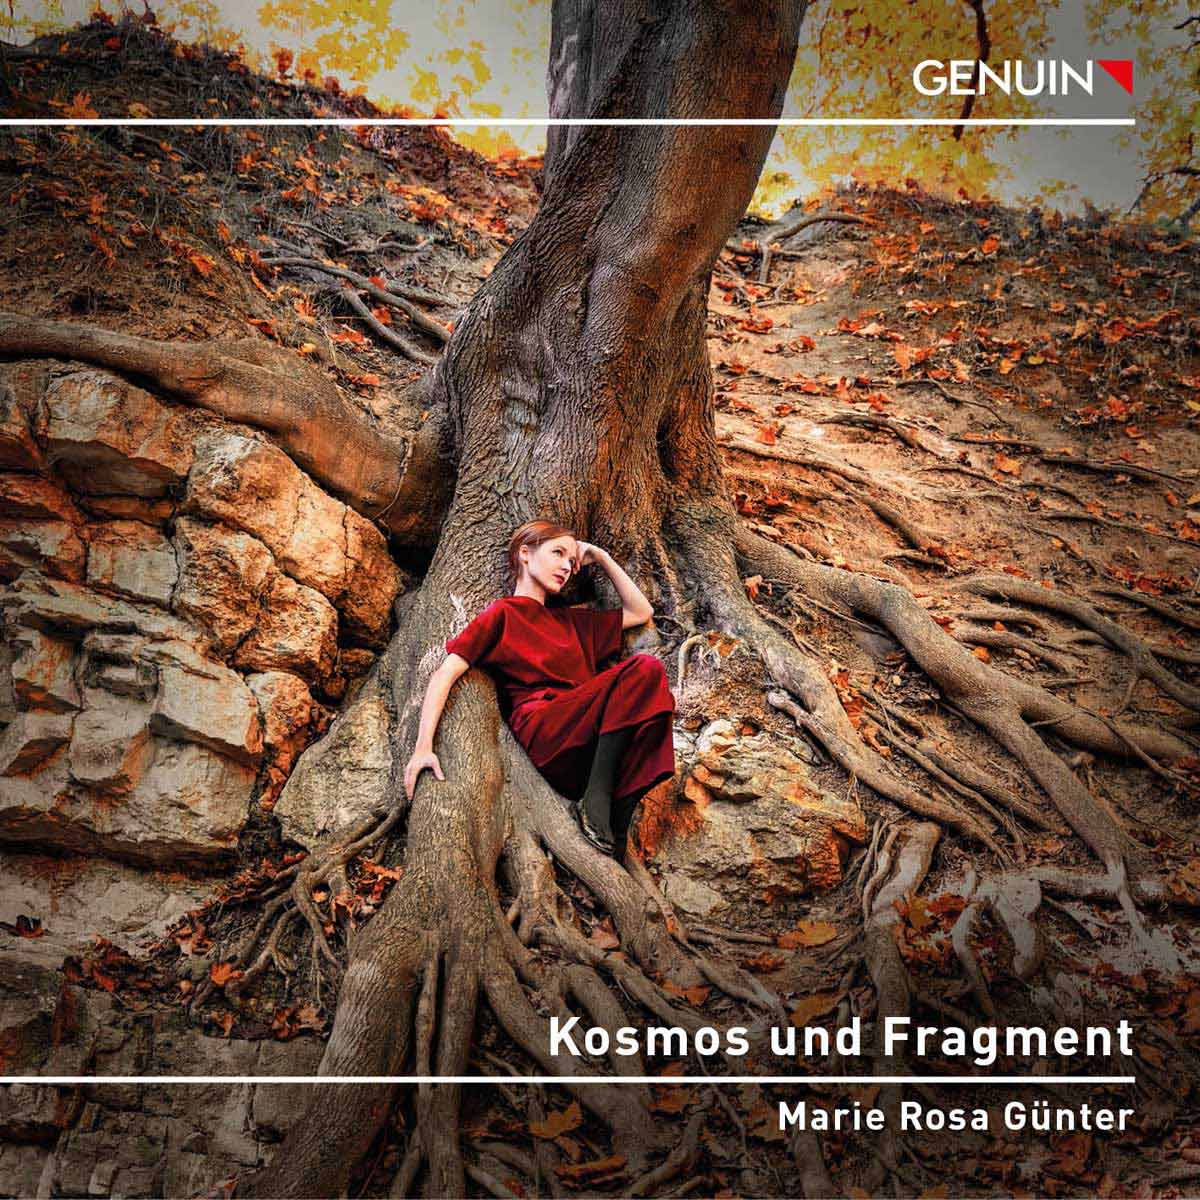 CD album cover 'Kosmos und Fragment' (GEN 23833) with Marie Rosa Gnter